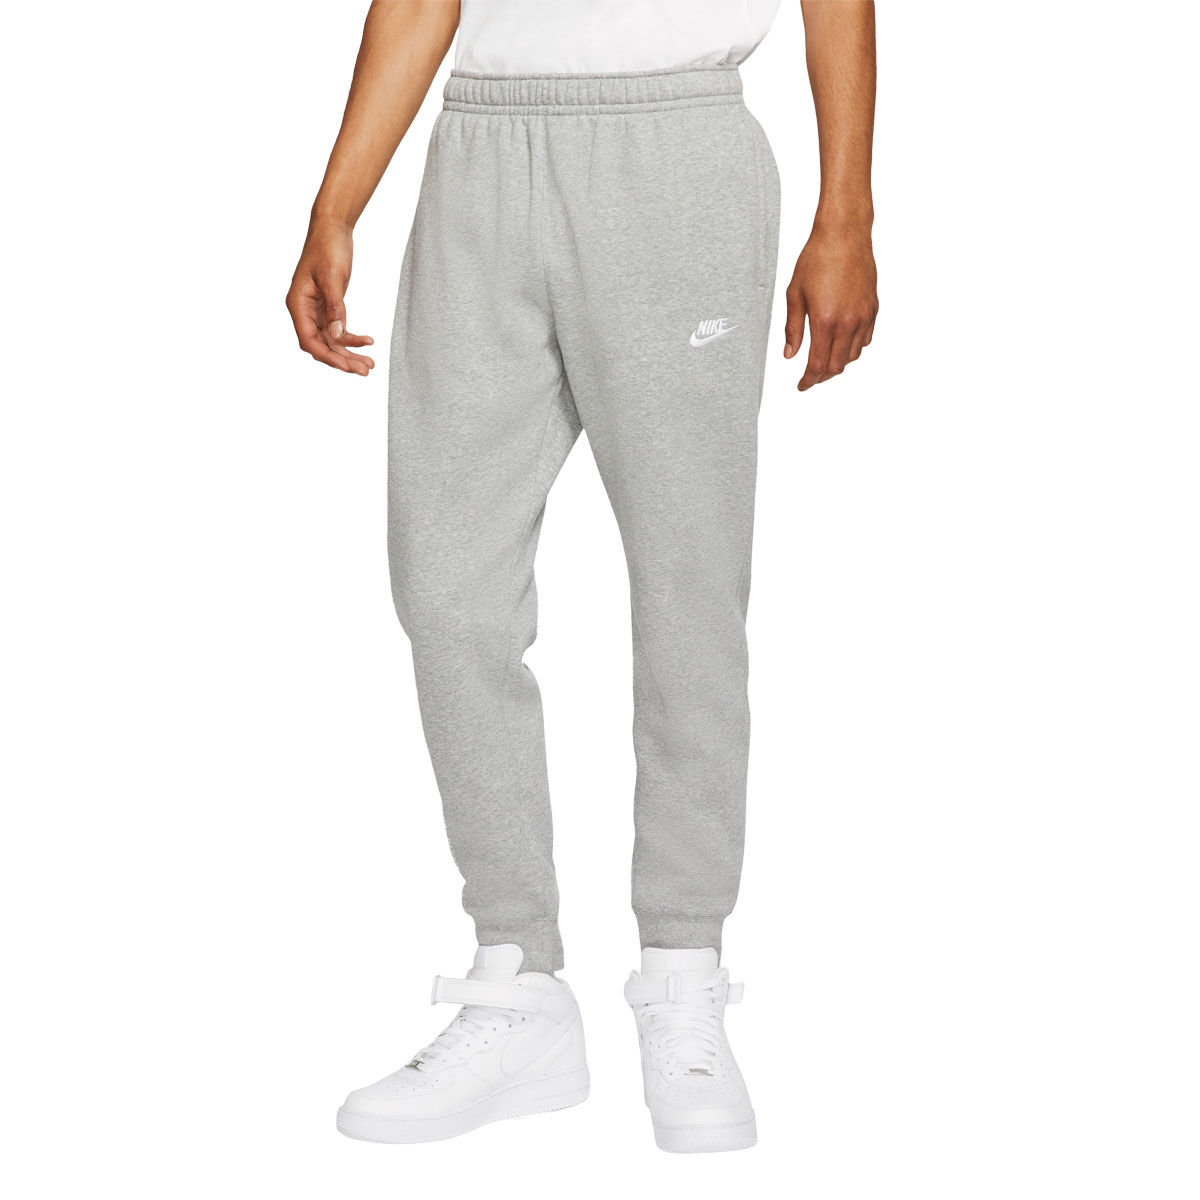 Nike Tech Fleece Collection. Clothing for Men, Women and Kids. Fleece  Fabric | Offers, Stock | Sneaker10 Cyprus